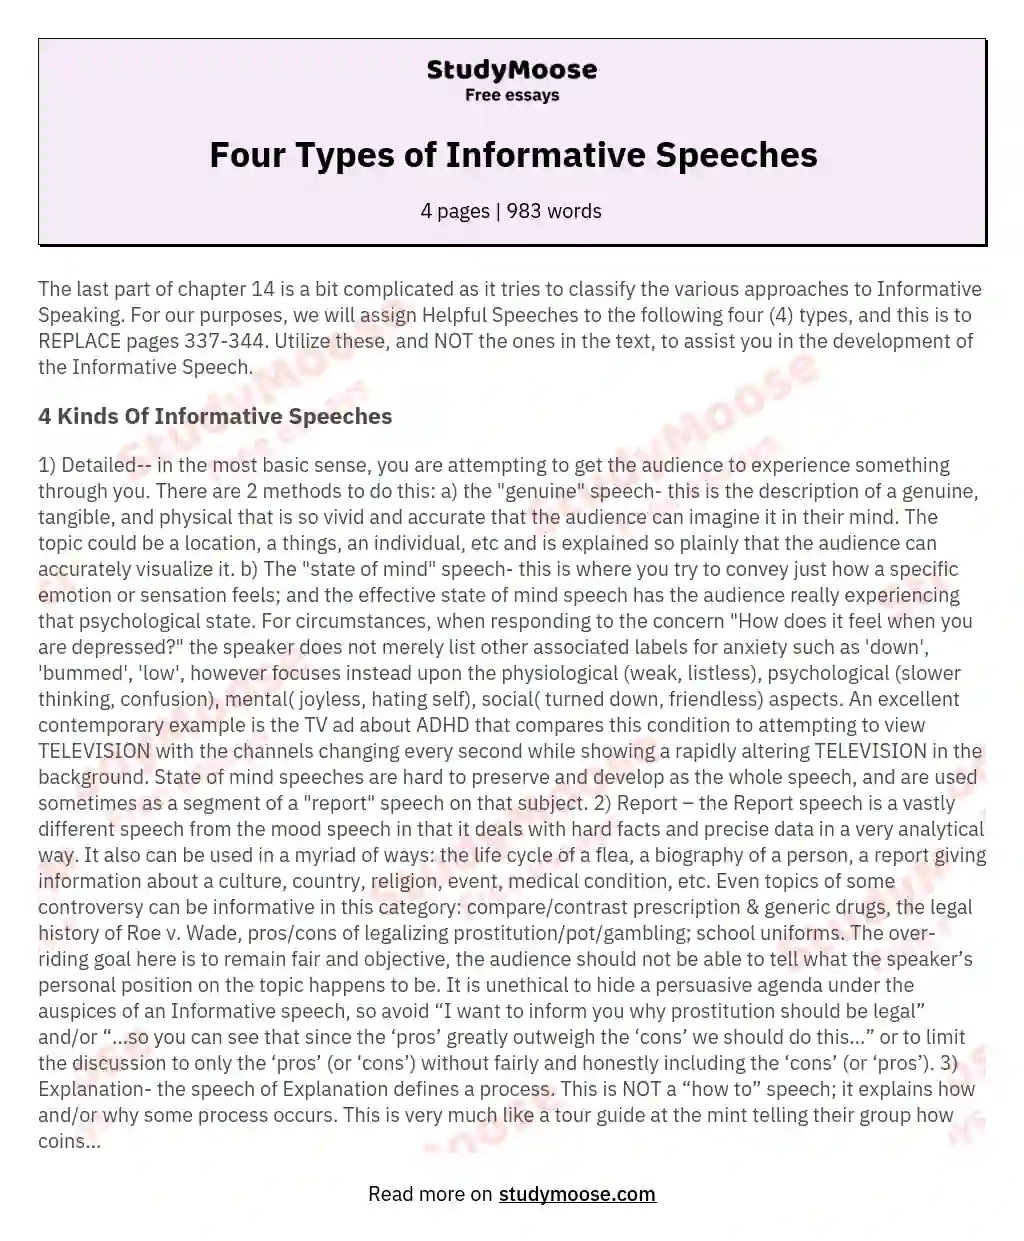 Four Types of Informative Speeches essay